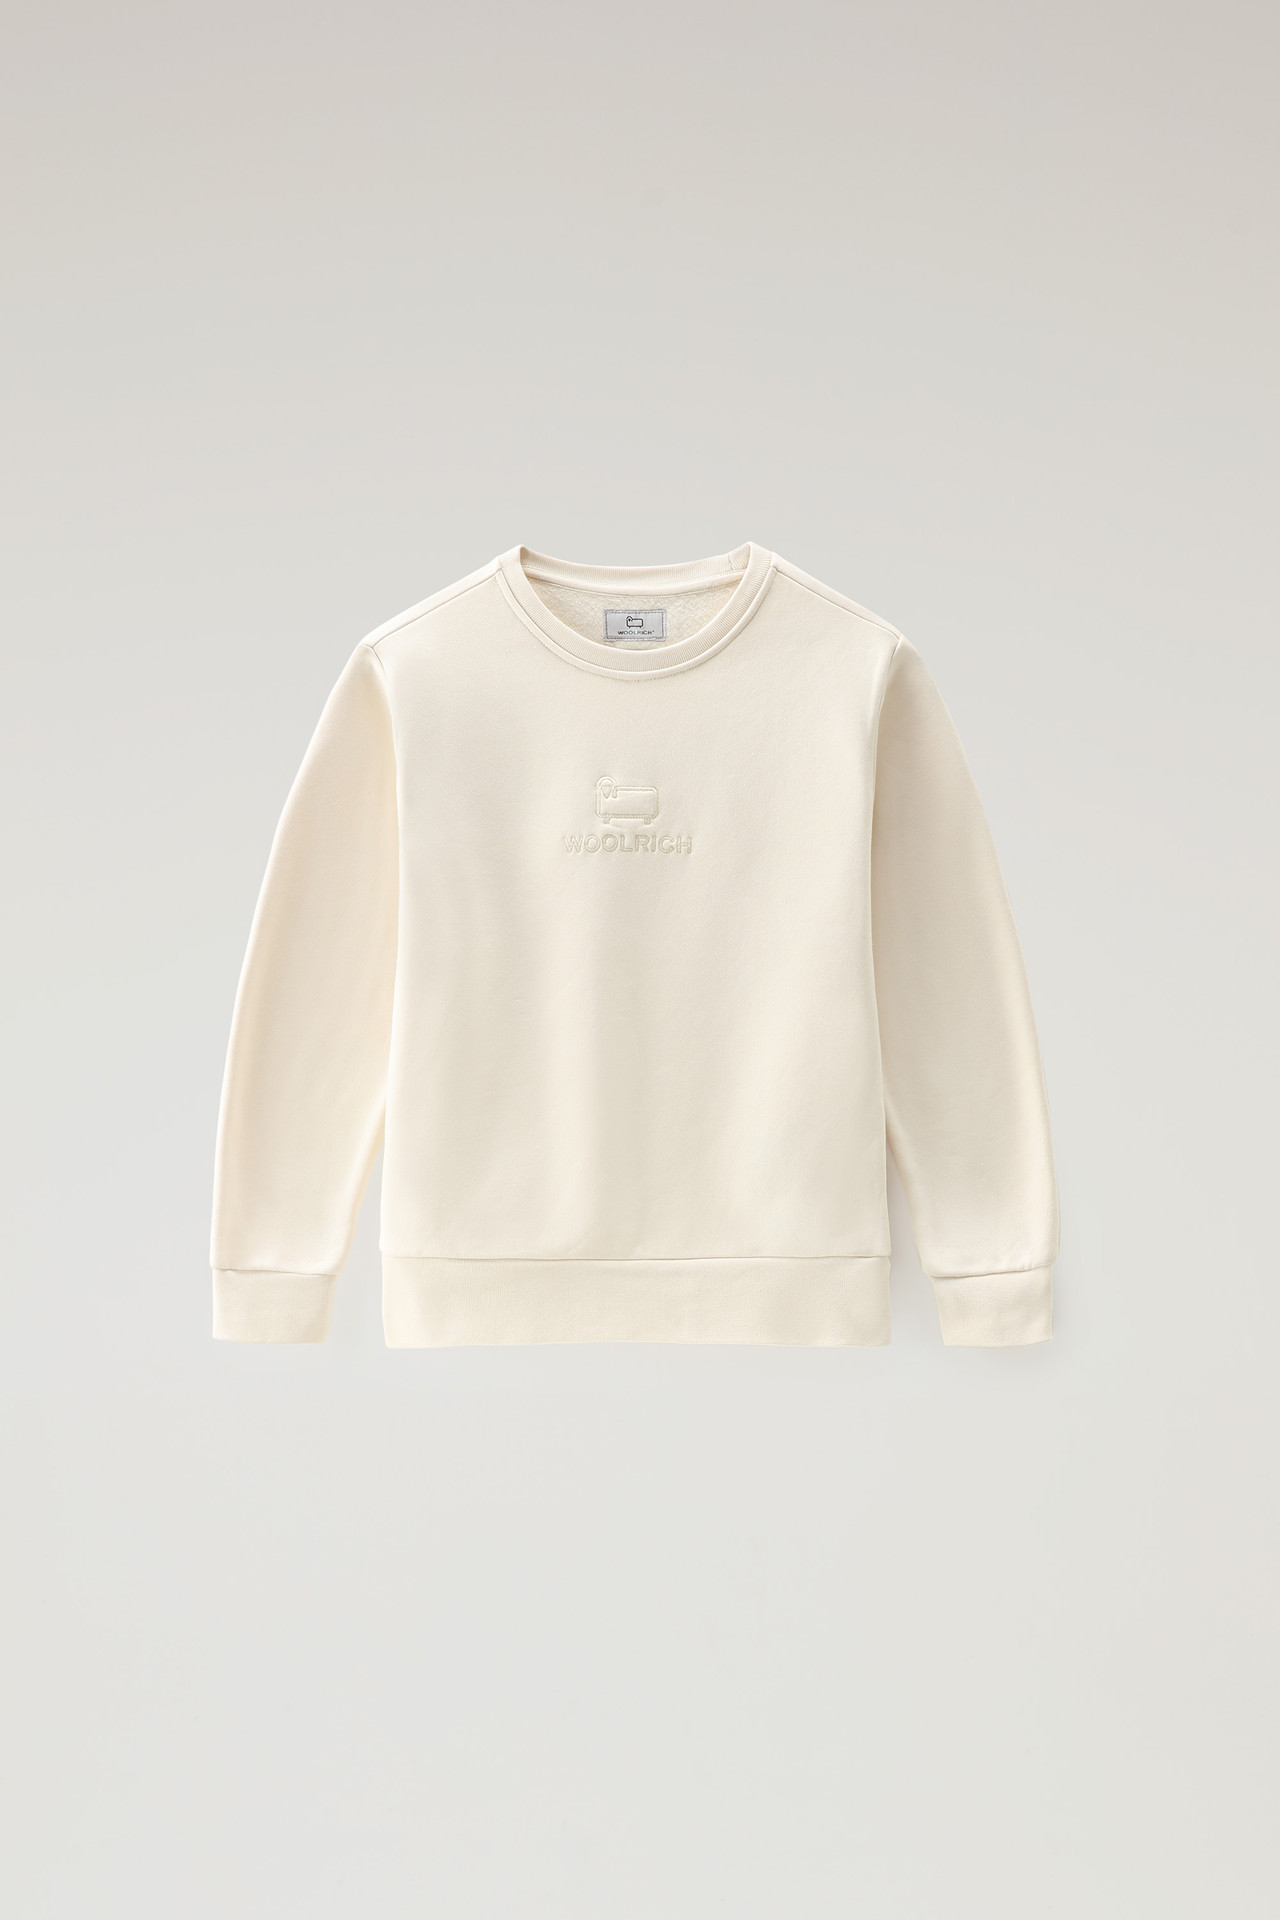 Woolrich KIds – Sweatshirt Logo – Of-White